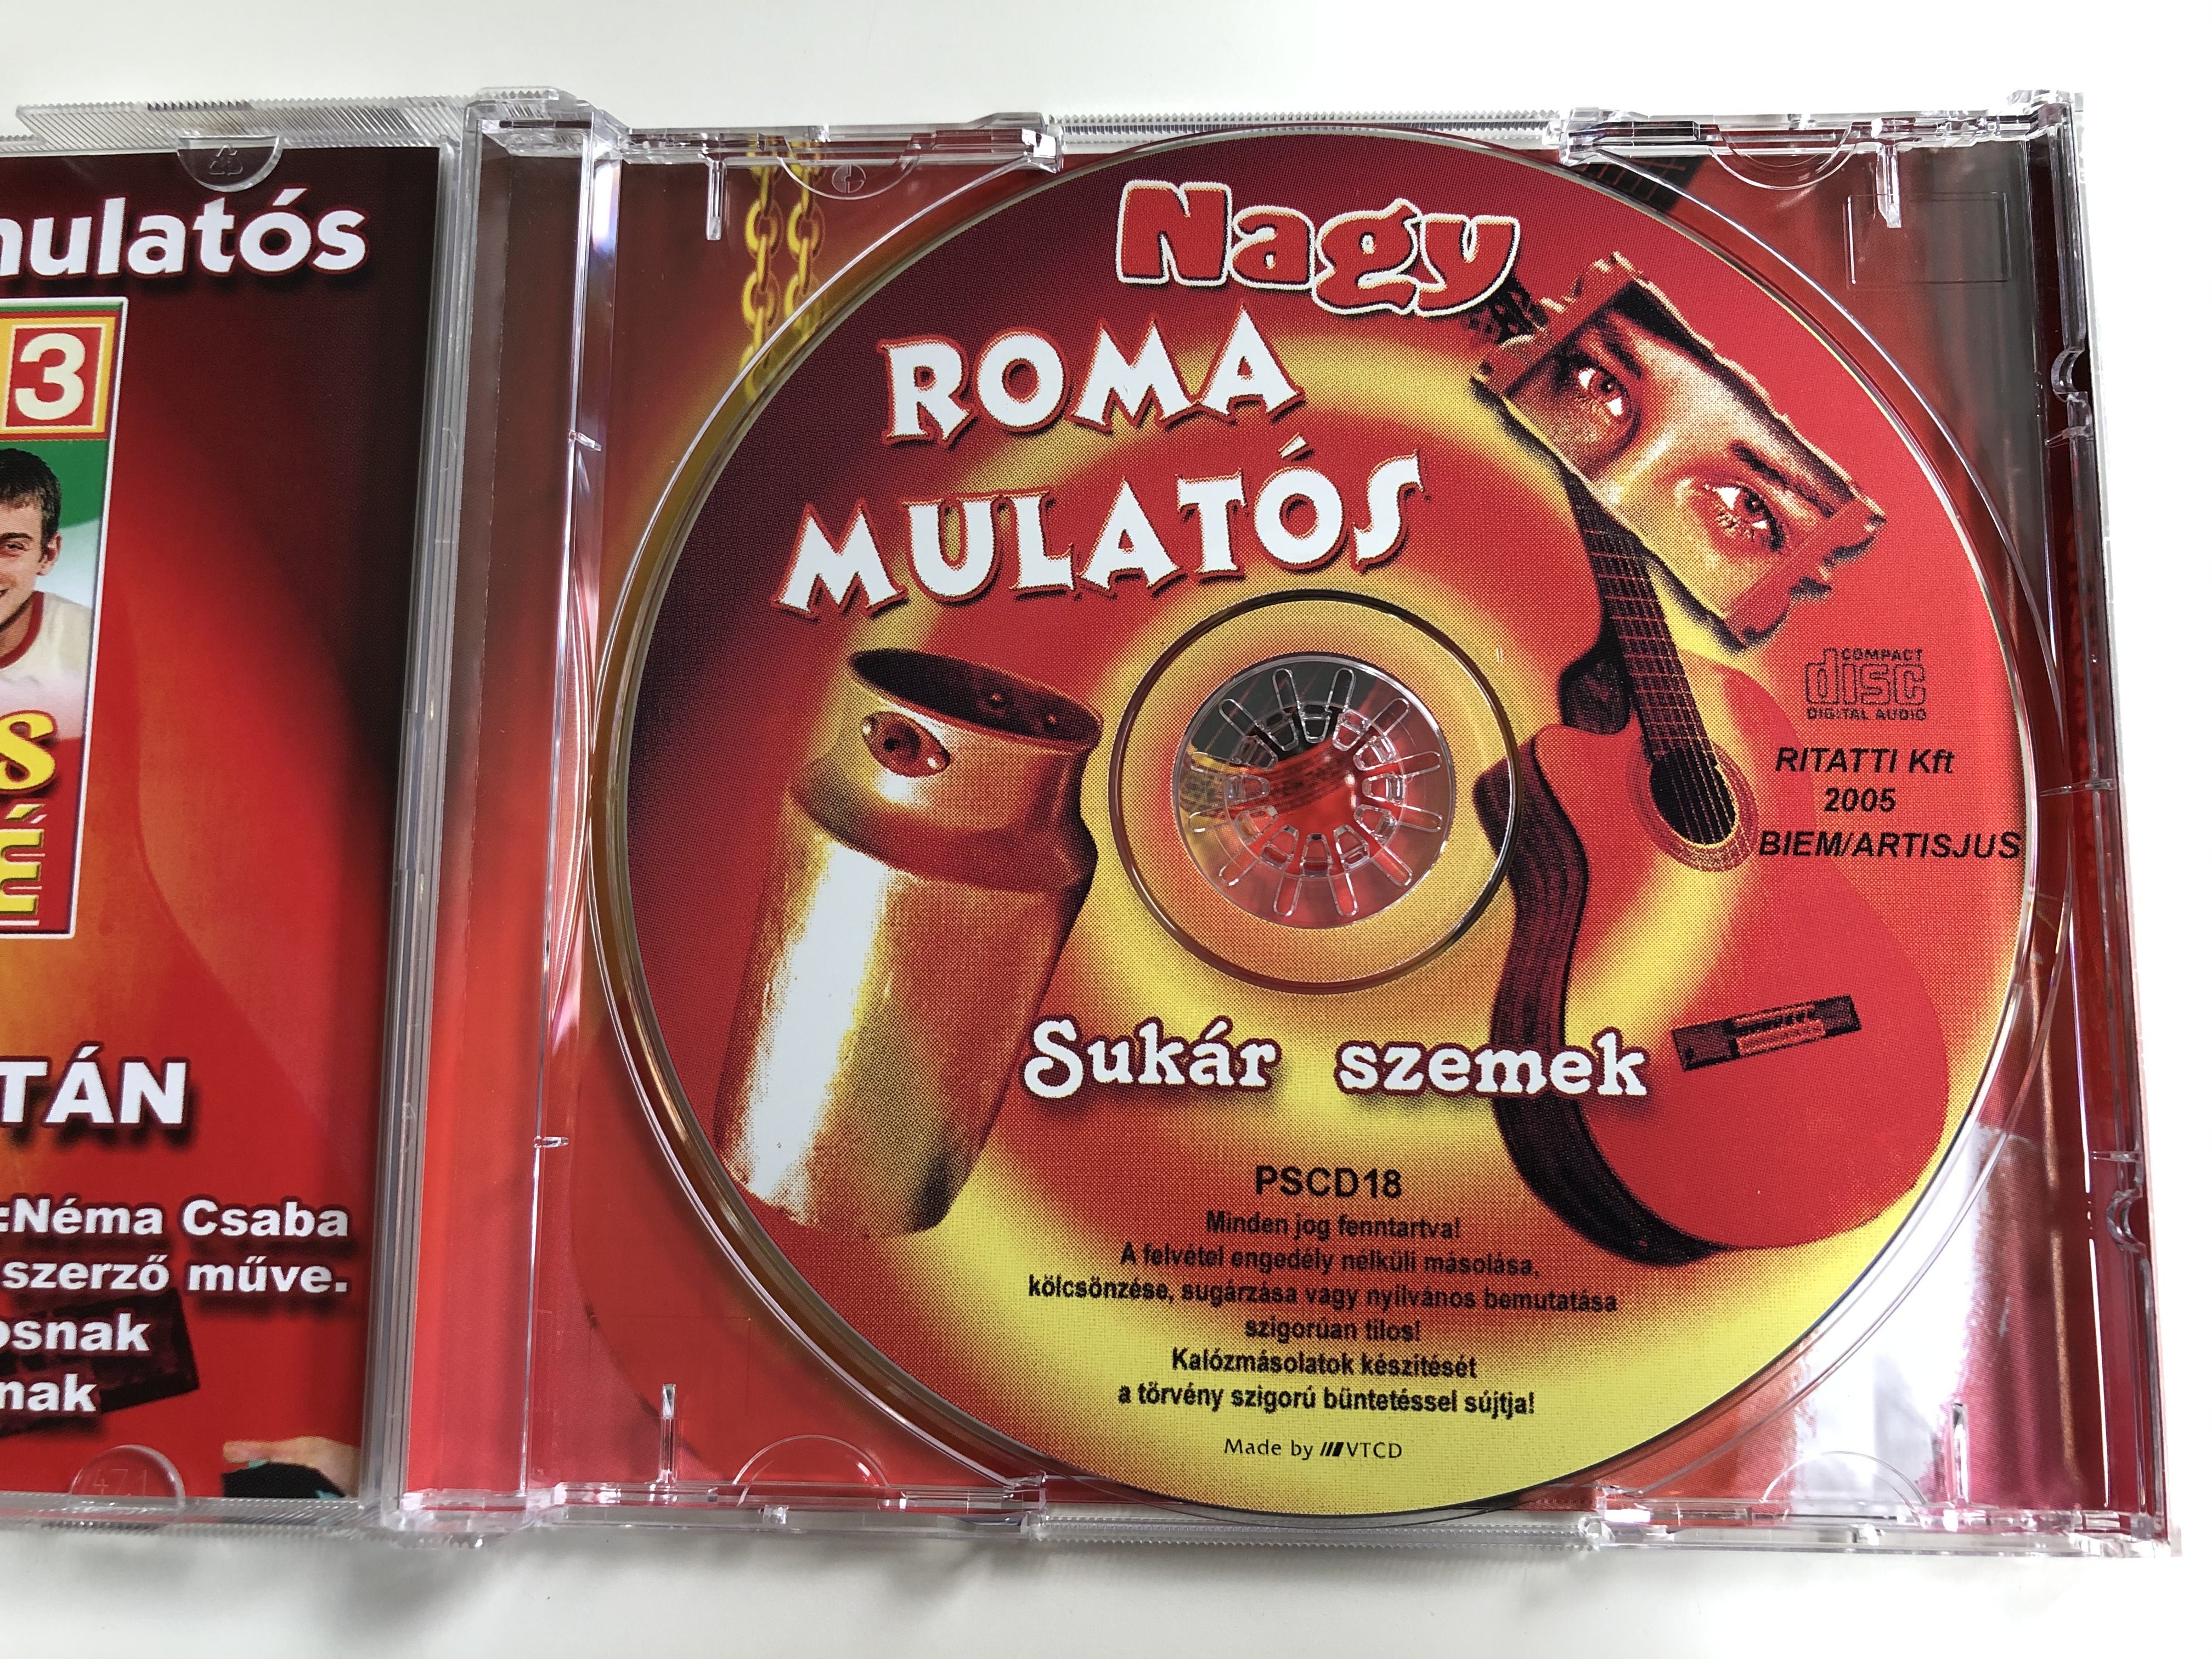 nagy-roma-mulatos-sukar-szemek-ritatti-kft-audio-cd-2005-pscd18-2-.jpg